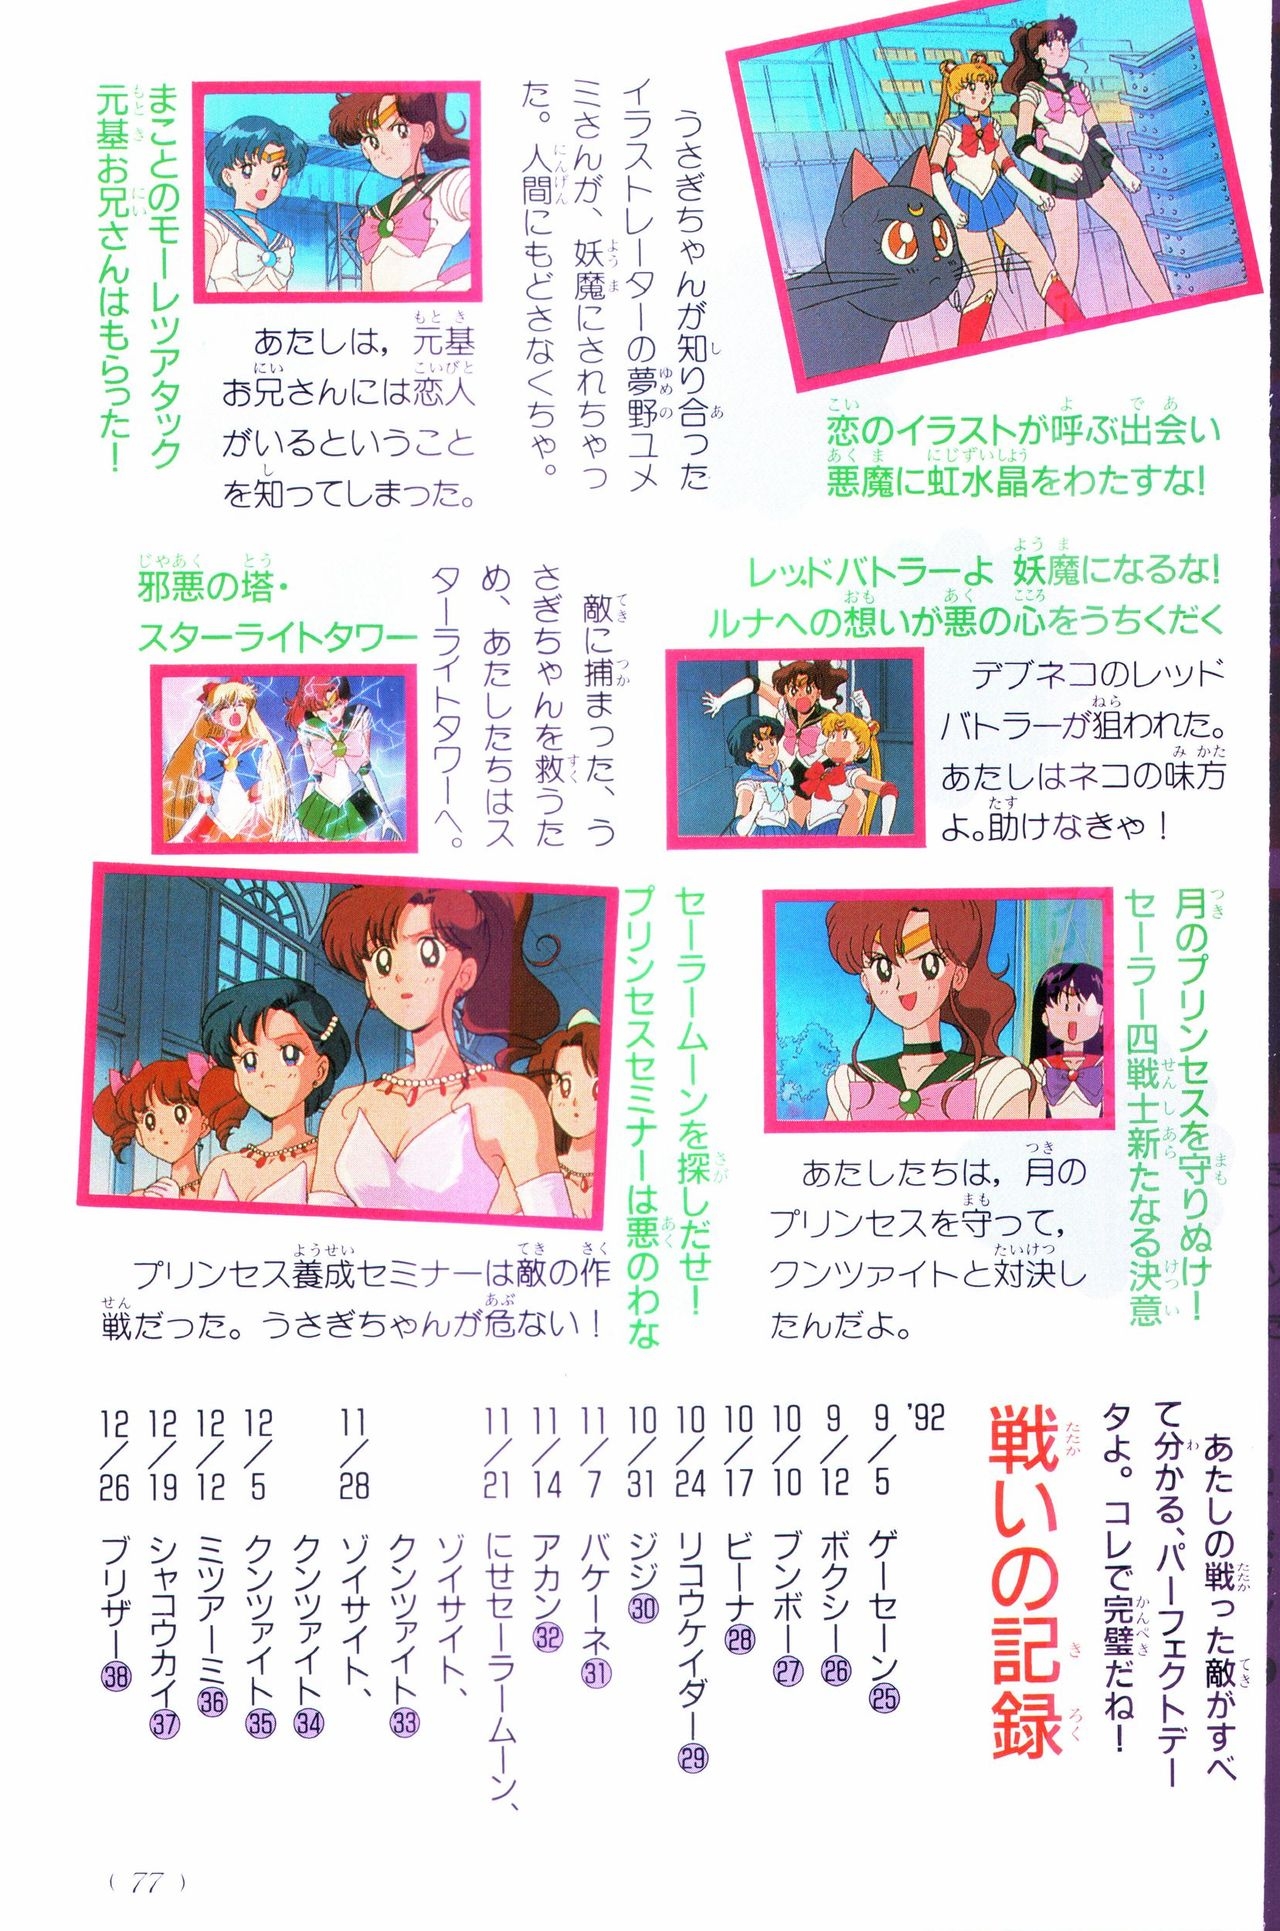 Sailor Moon Official Fan Book – Sailor Jupiter 60